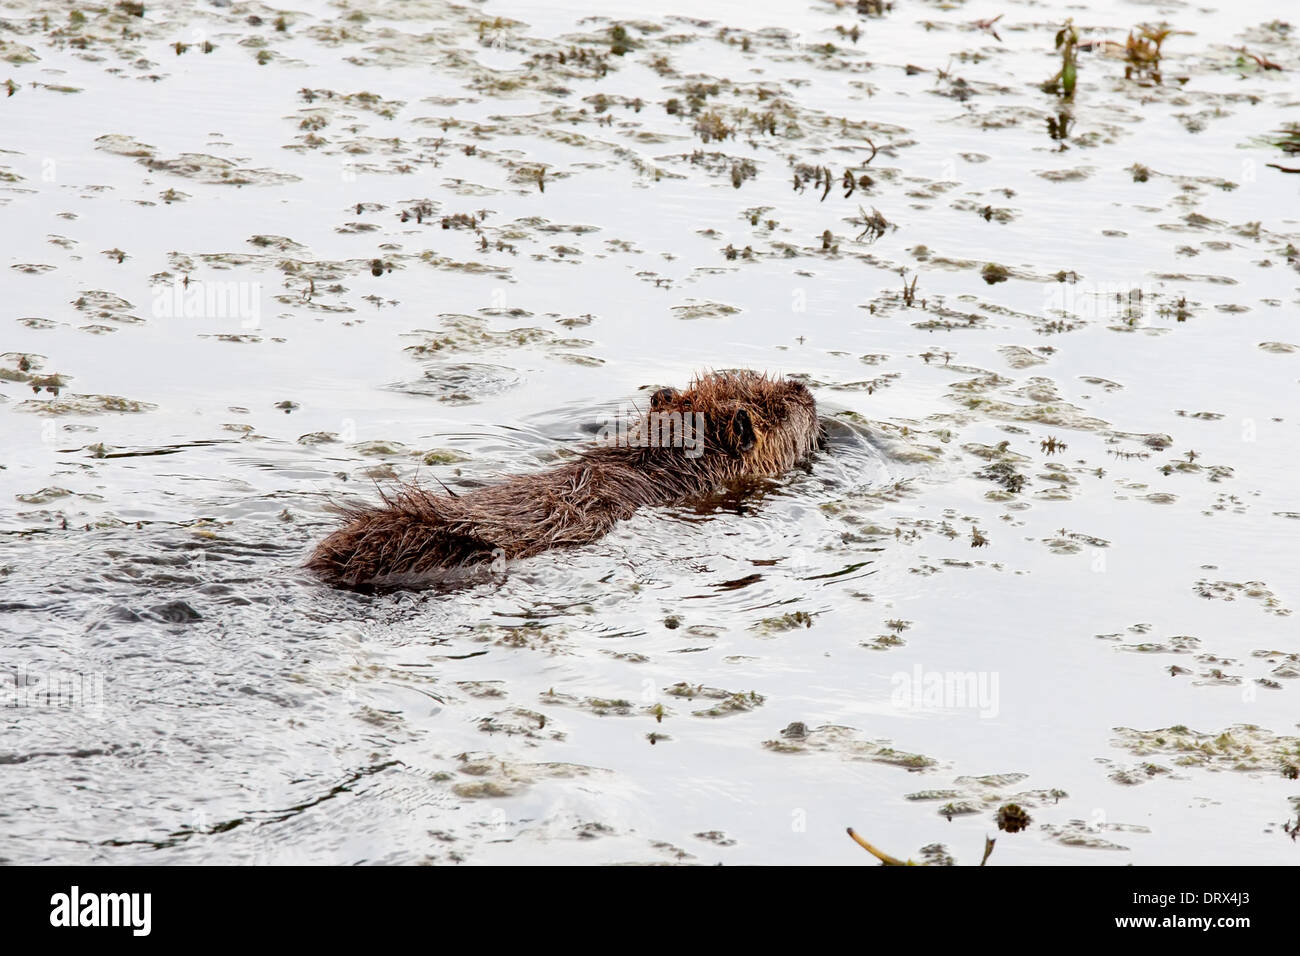 (Coypu myocastor coypus) nuotare in un stagno Foto Stock